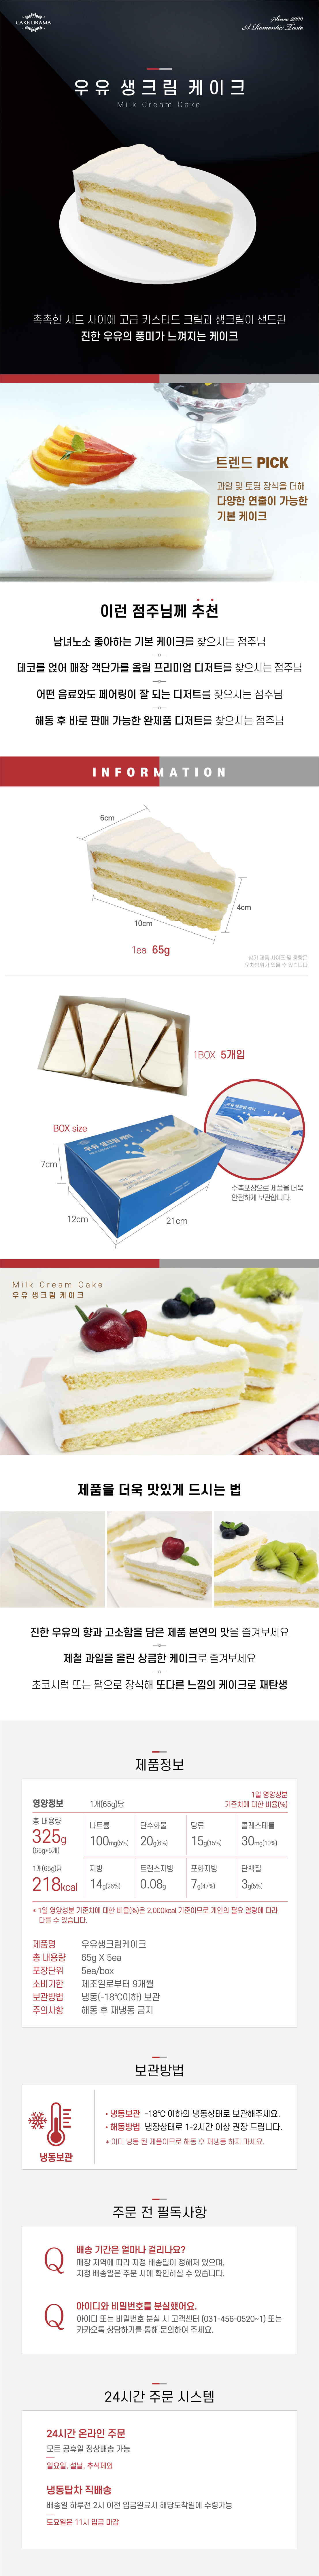 Milk_cream_cake.jpg